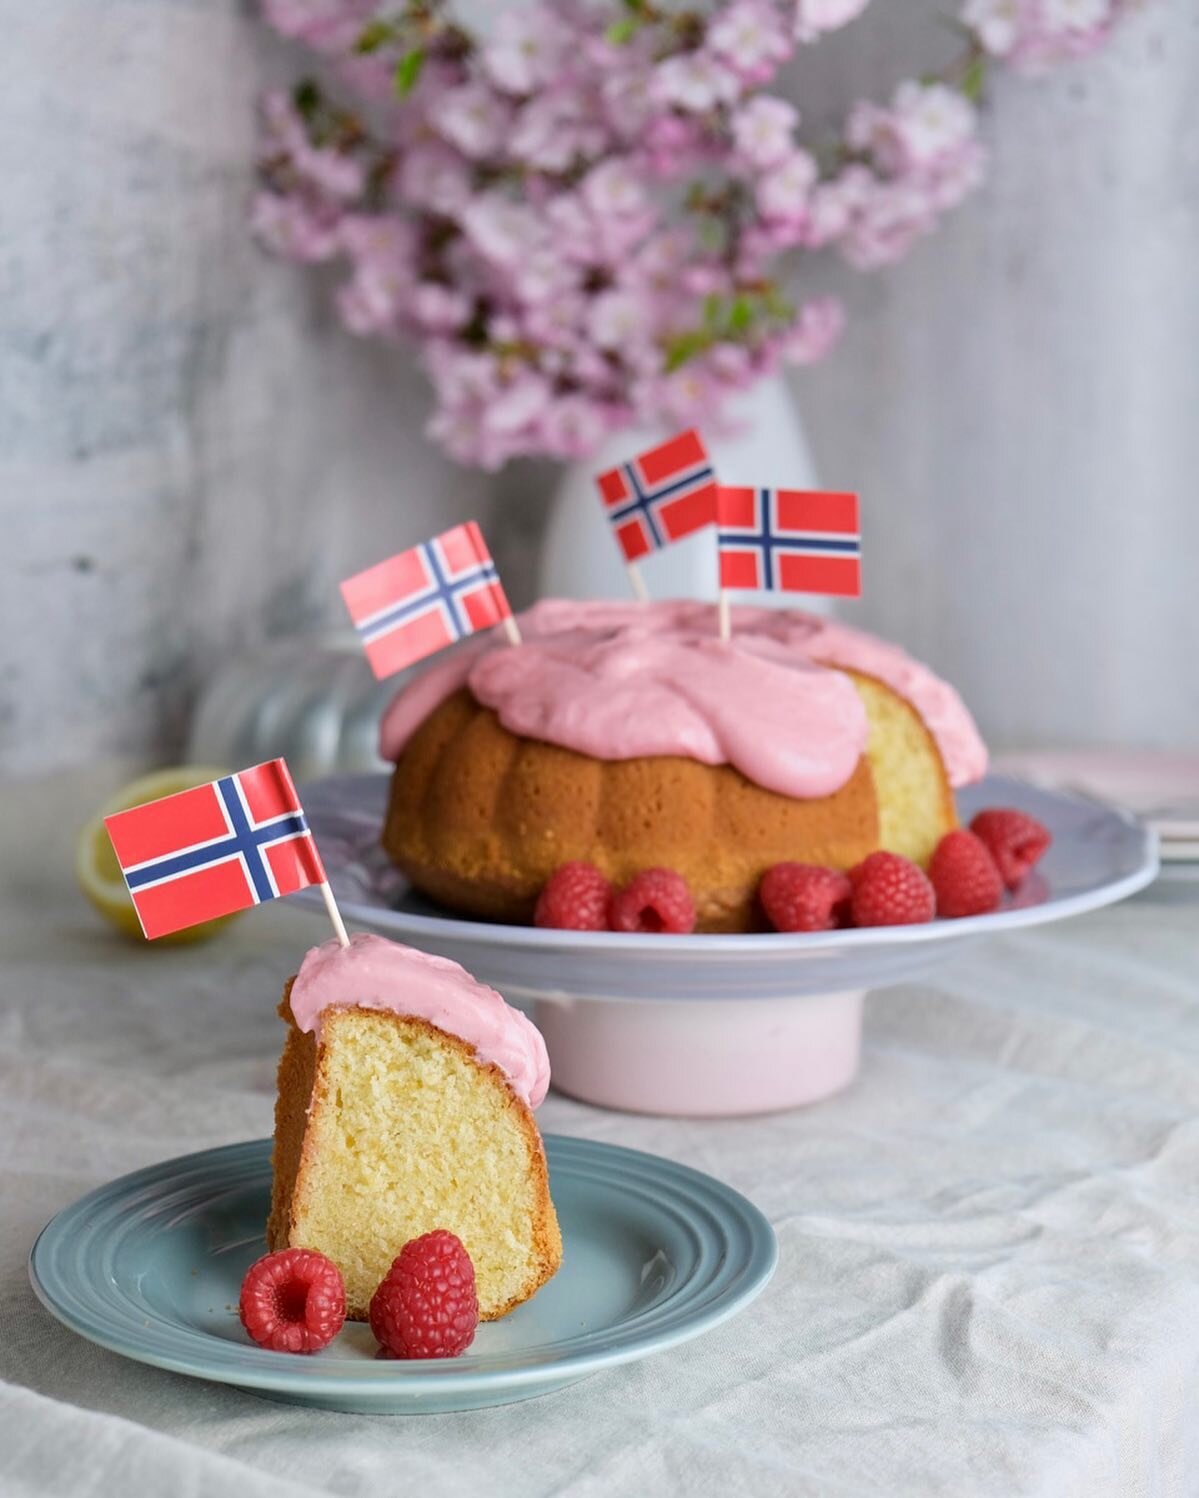 Gratulerer med dagen 🇳🇴🇳🇴🇳🇴🇳🇴
.
.
#17mai #glad17mai #17maikake #kake #gratulerermeddagennorge🇳🇴 #norge #norgesflagg #norway🇳🇴 #v&aring;r #sukkerbr&oslash;d #bringeb&aelig;r